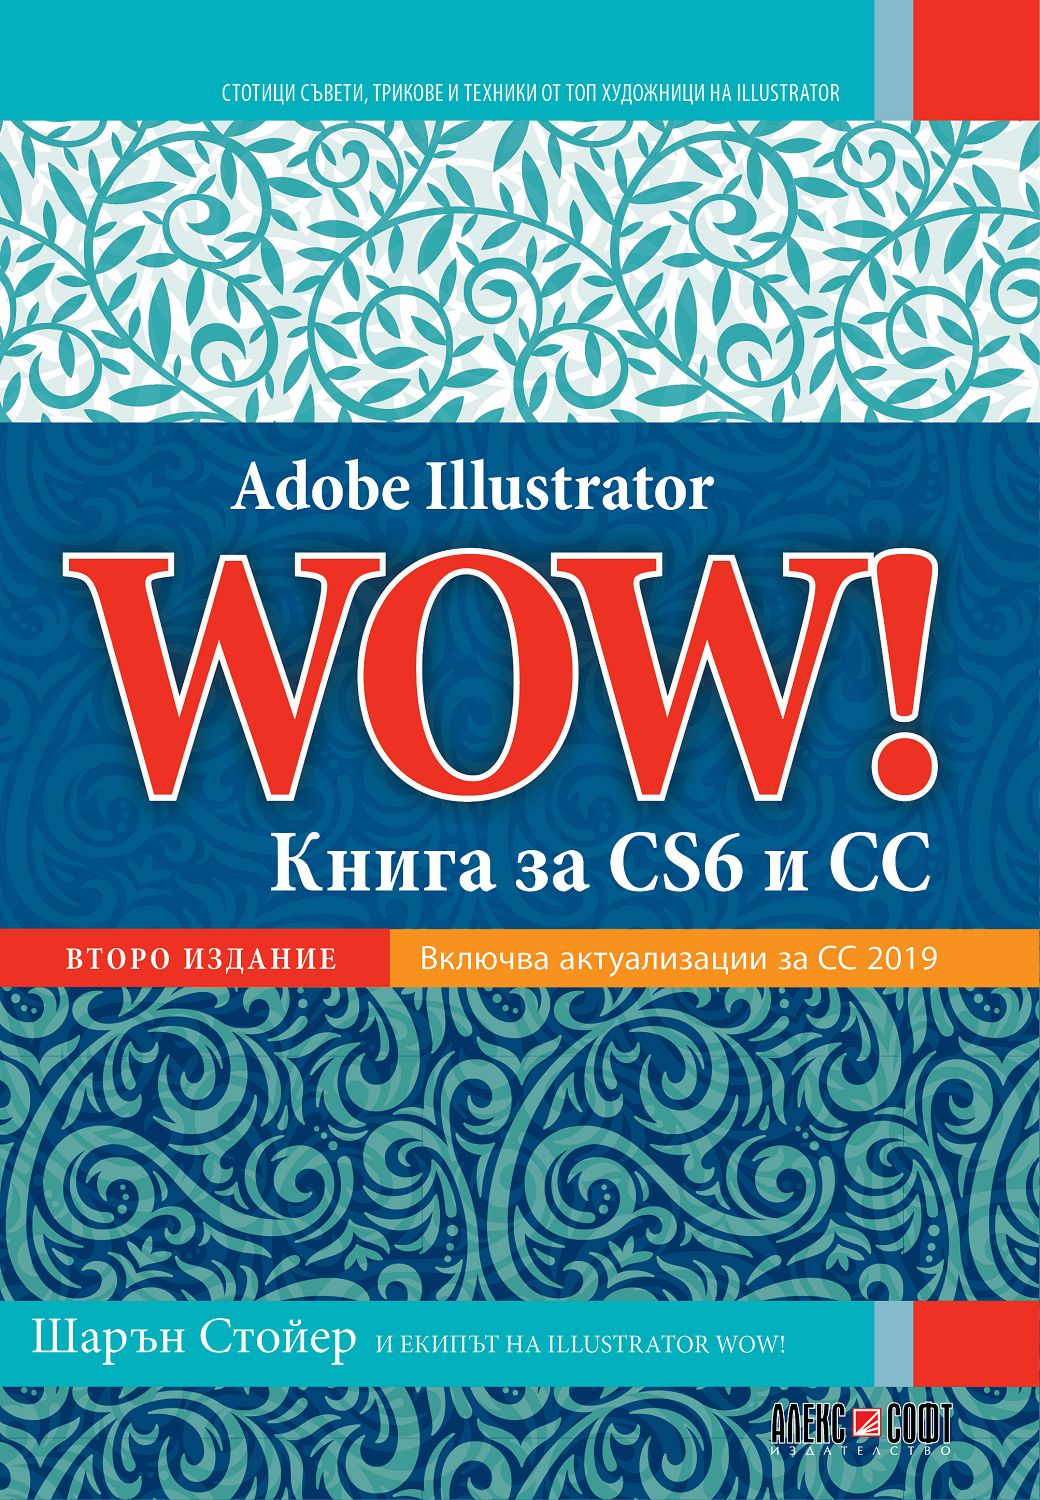 illustrator cs6 wow book pdf download